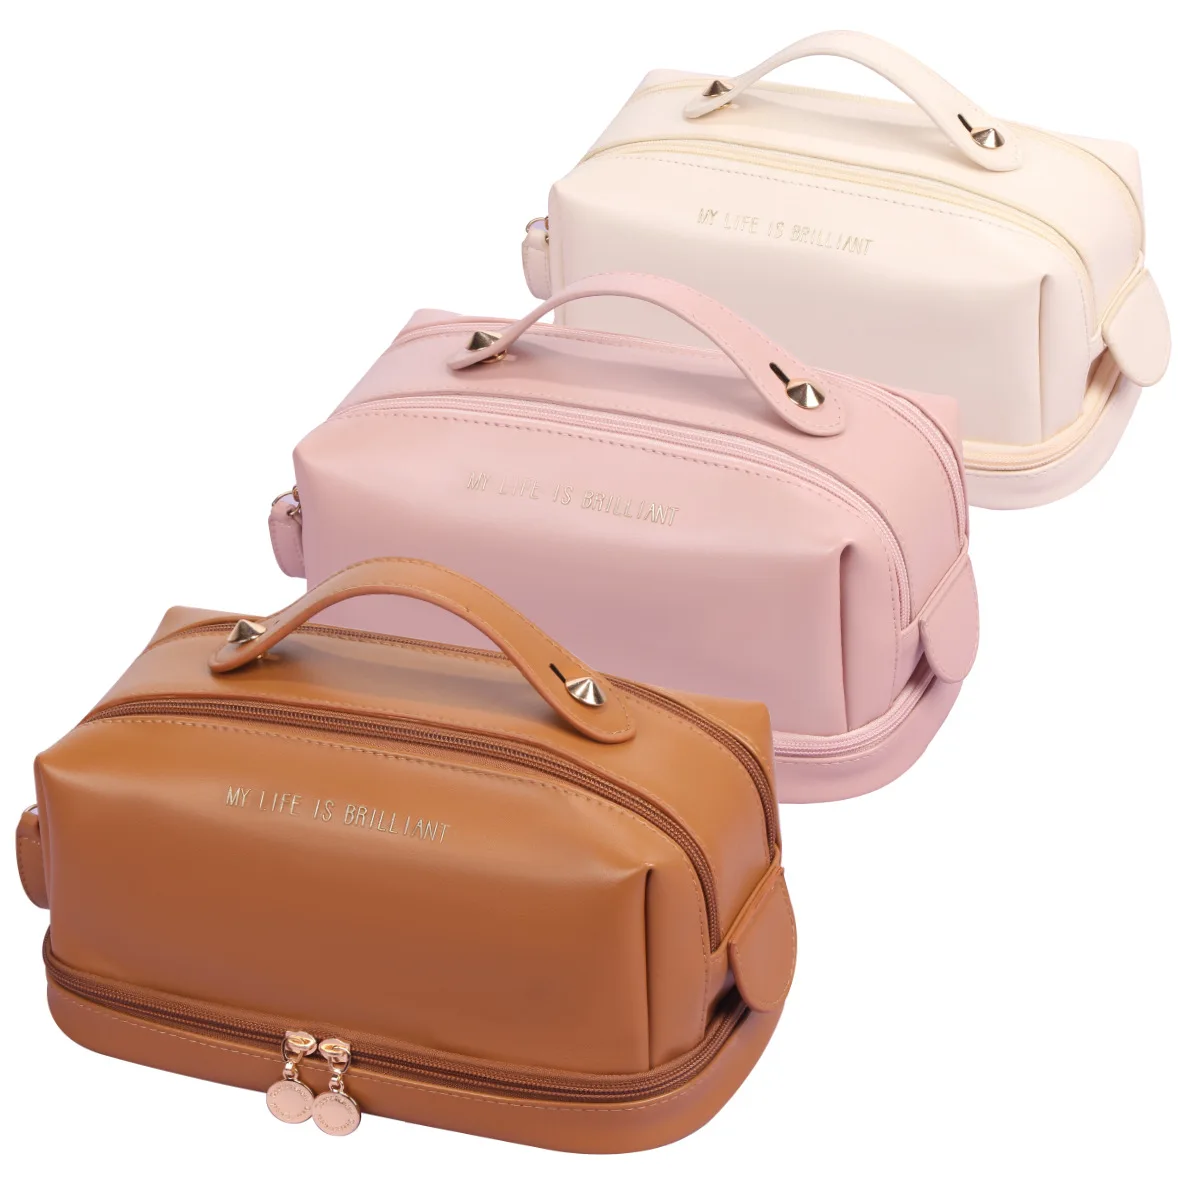 Pu Leather Cosmetic Travel Makeup Bag for Girls Women Brush Bags Reusable Toiletry Bag